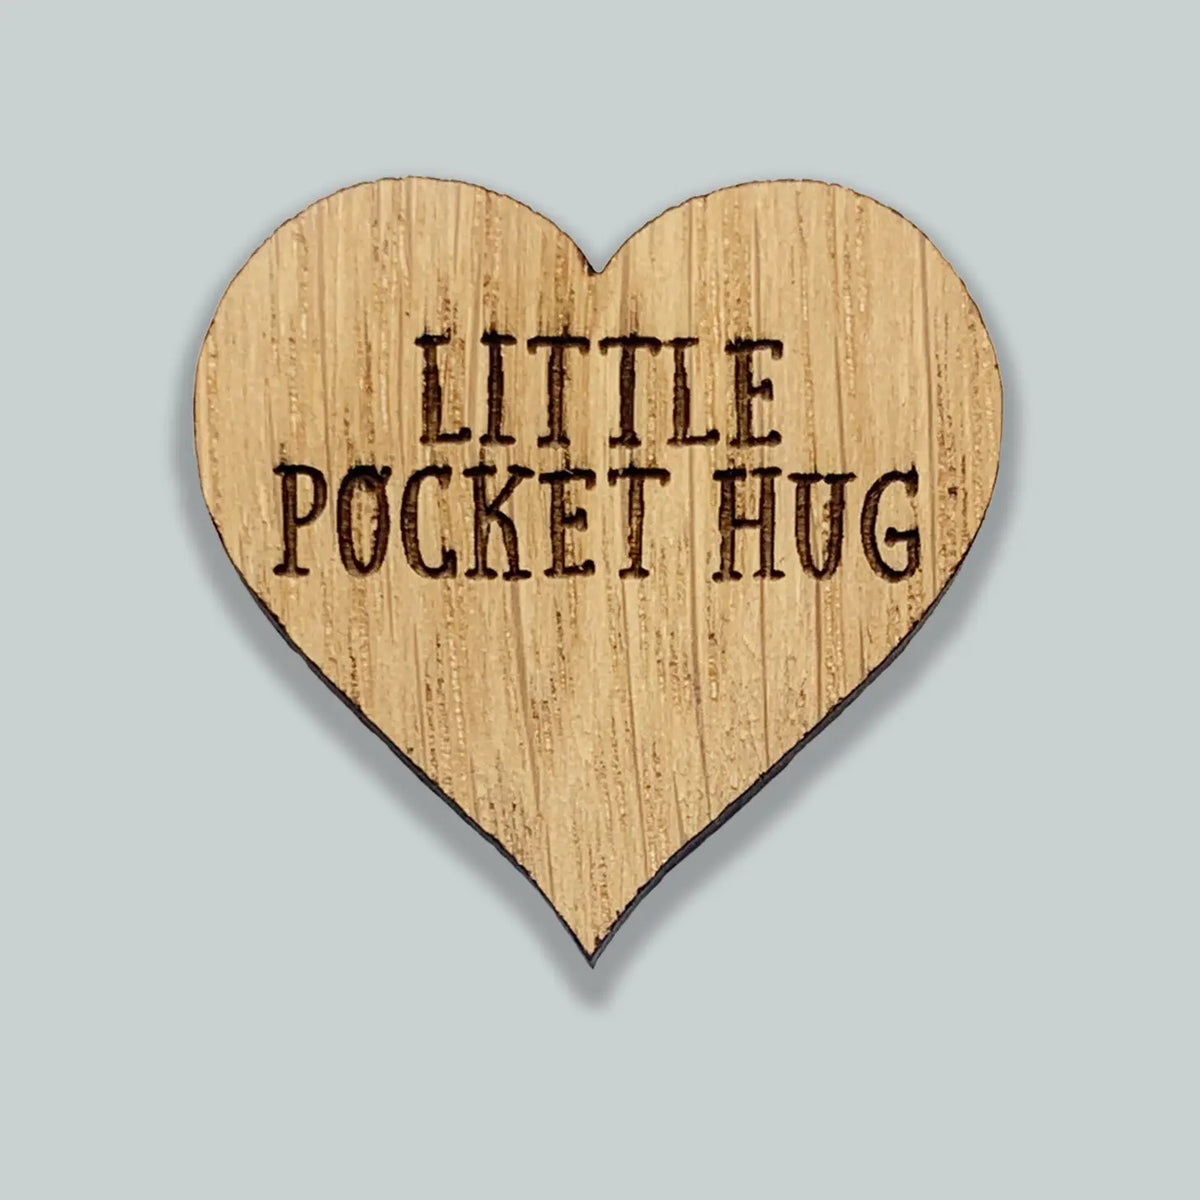 Big Bear Hug | Little Pocket Hug